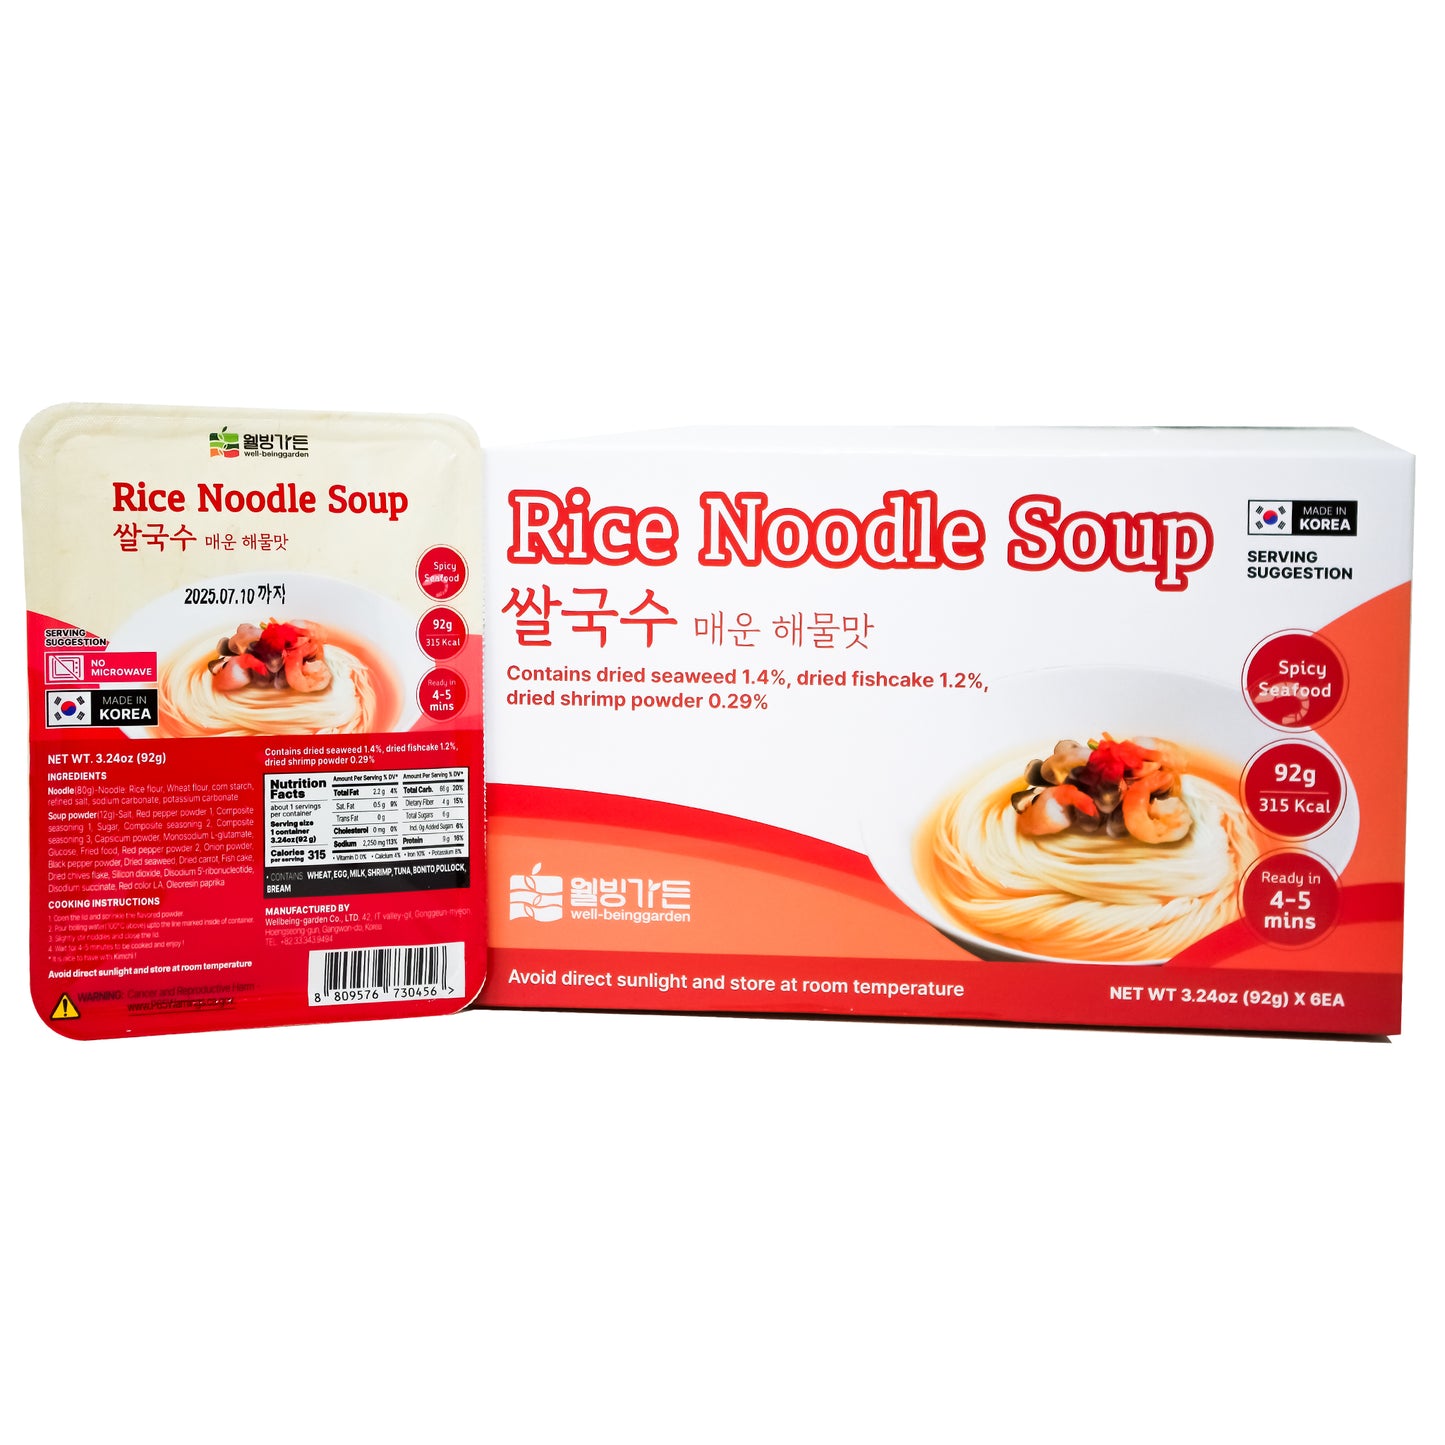 Rice Noodle Soup BENTO / Spicy SEAFOOD noodle-6 /BENTO 92g/pack 매운 해물맛